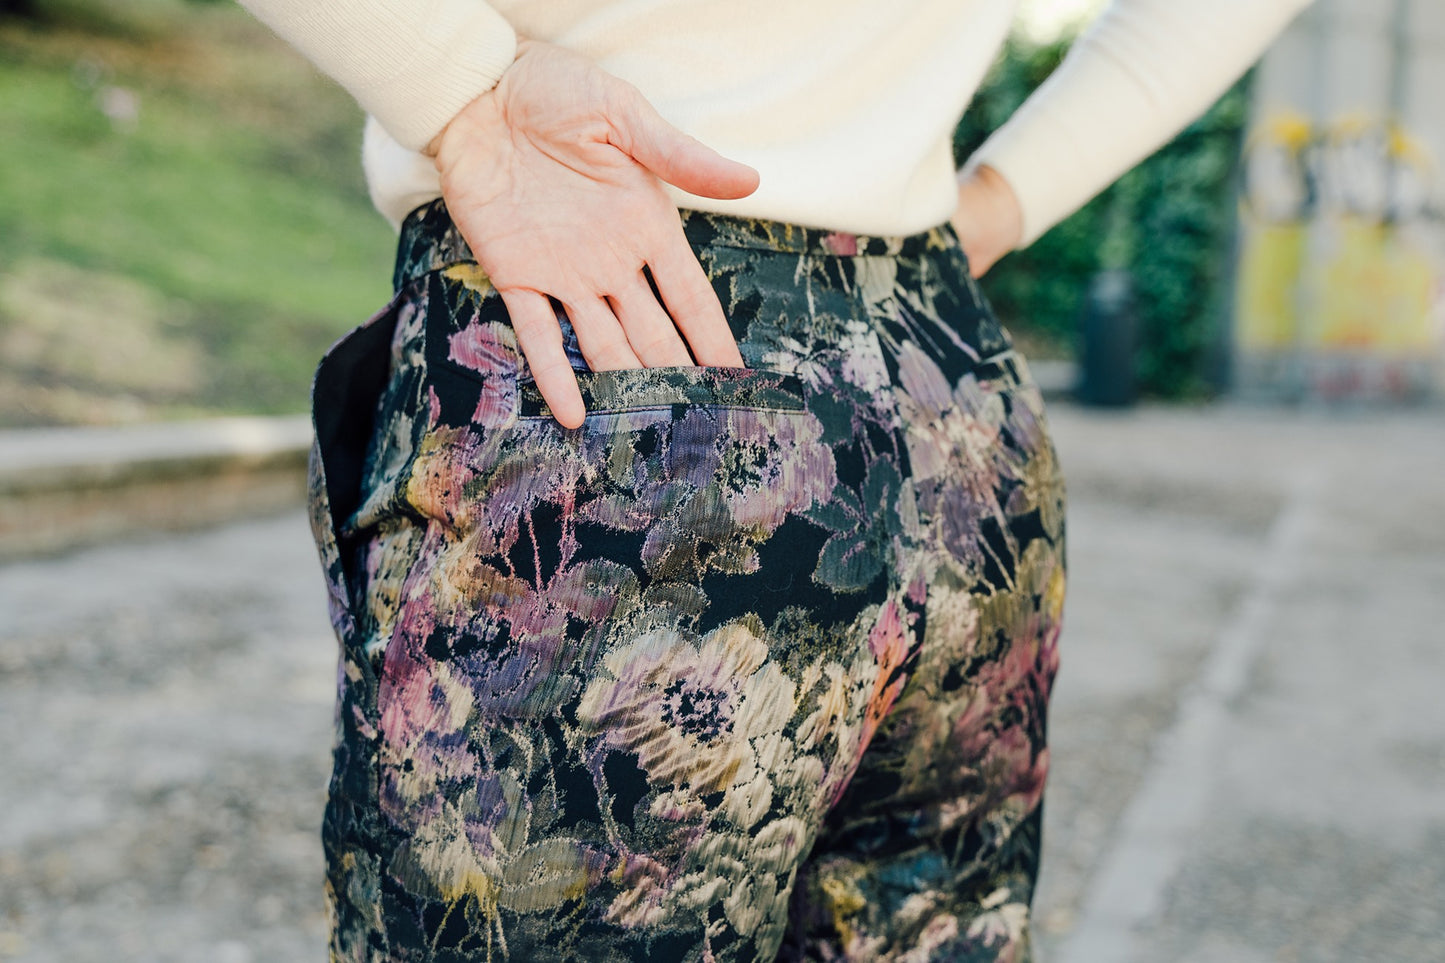 Liesl + Co - Peckham Women's Trousers Pattern